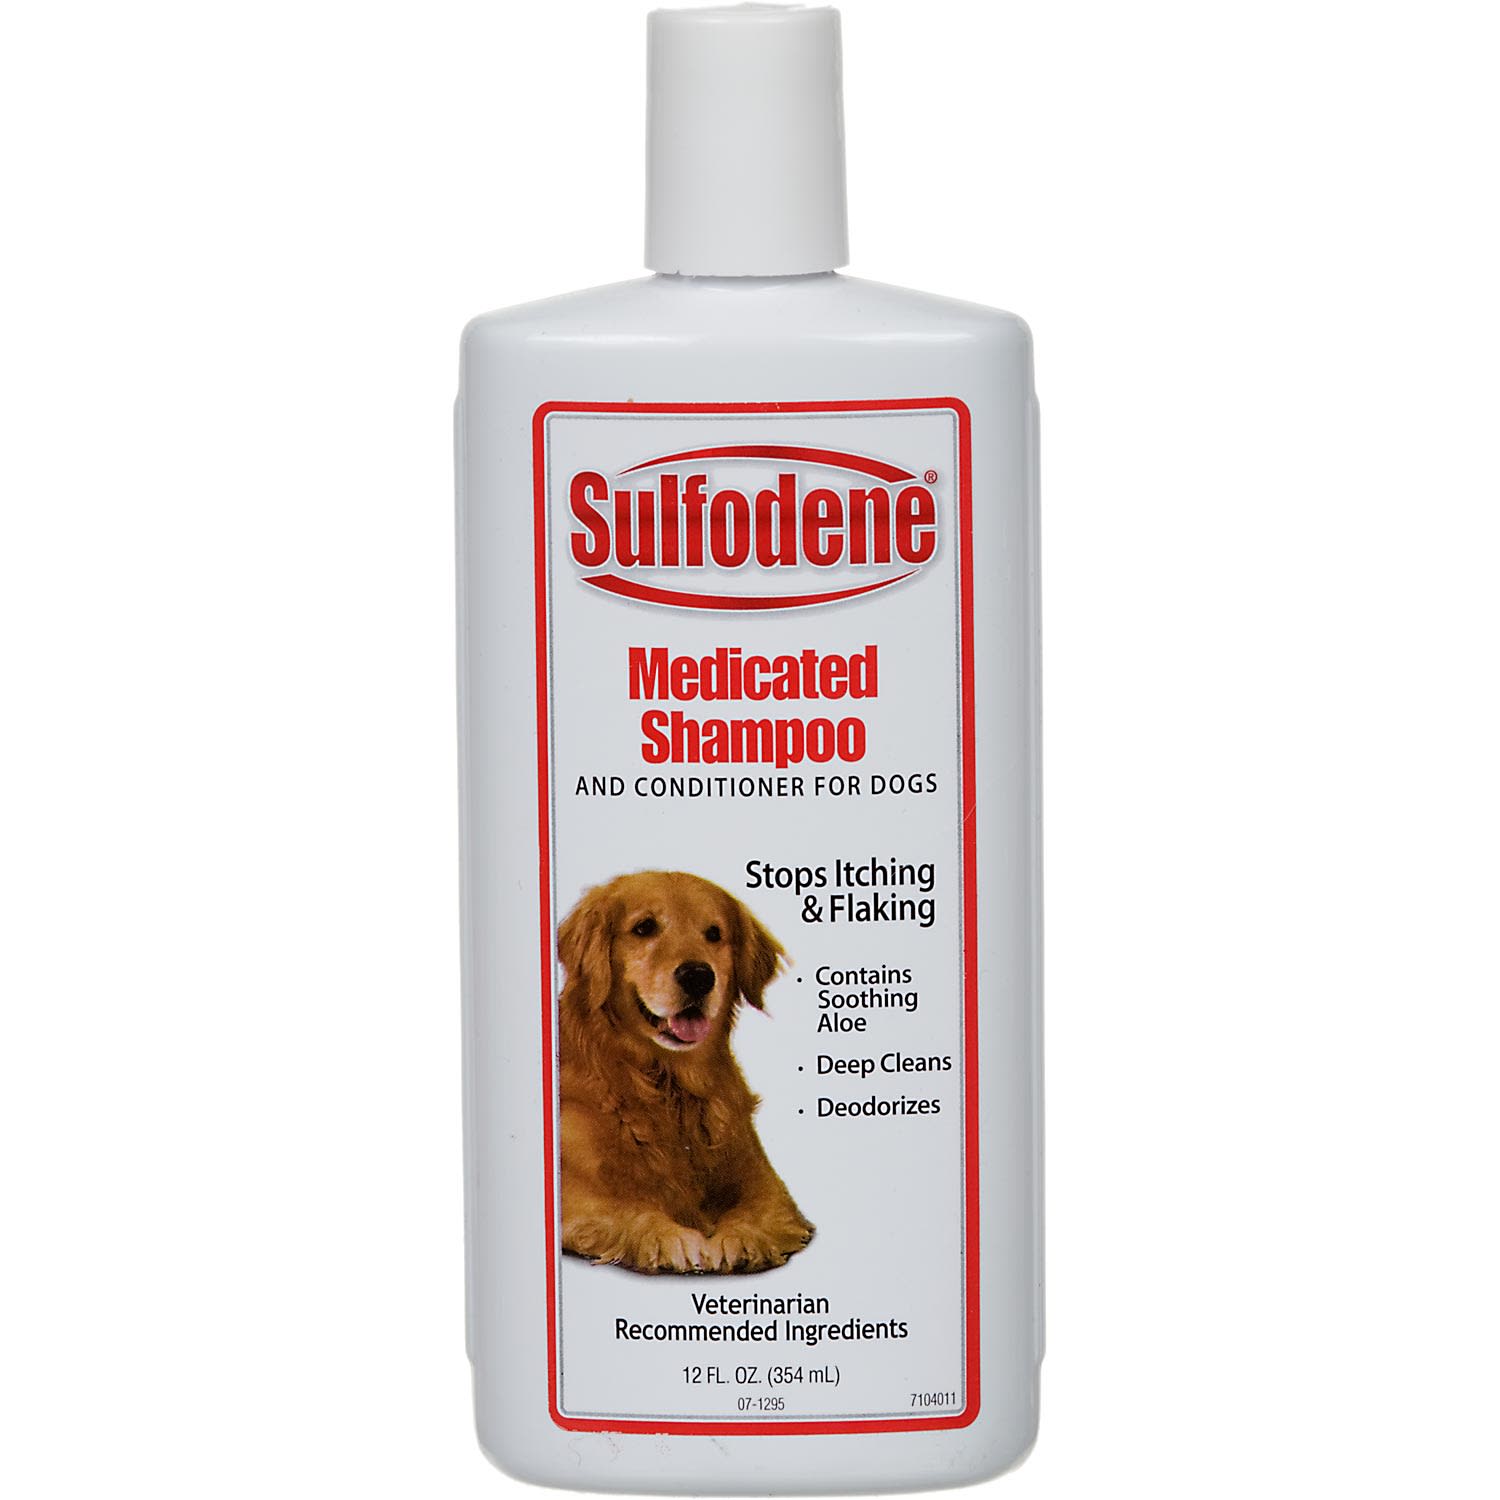 antibacterial dog shampoo